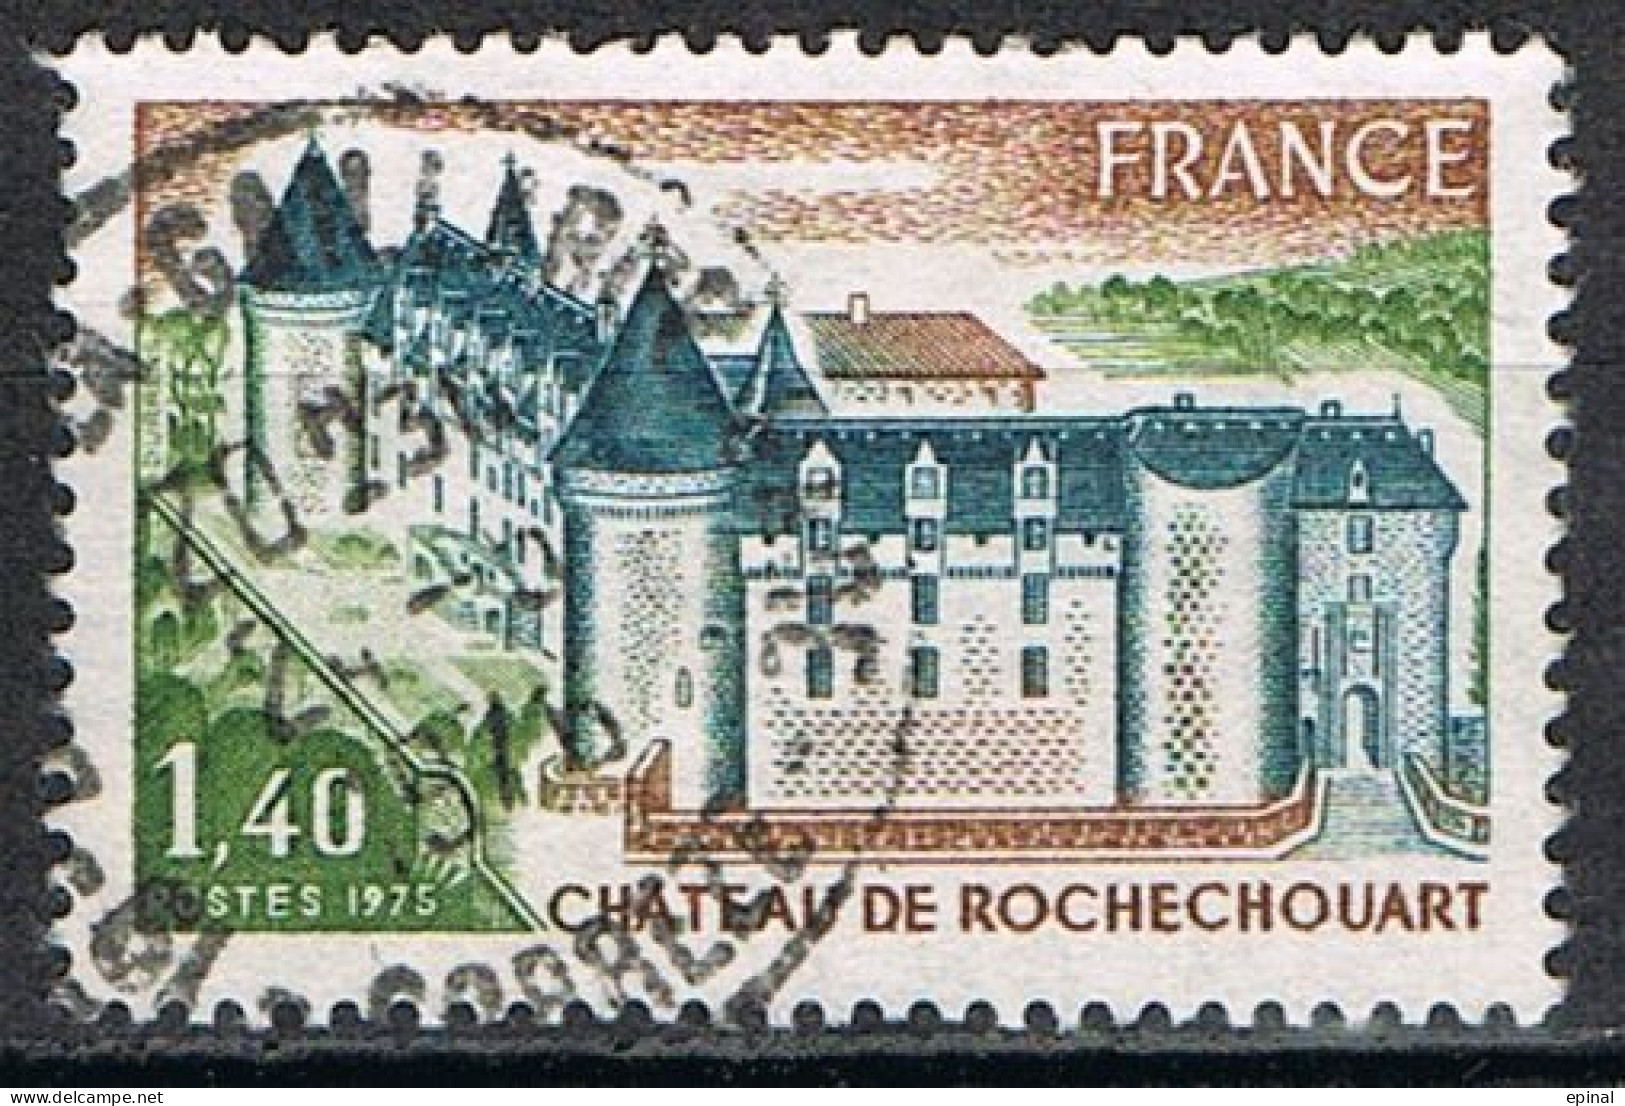 FRANCE : N° 1809 Oblitéré (Château De Rochechouart) - PRIX FIXE - - Gebraucht